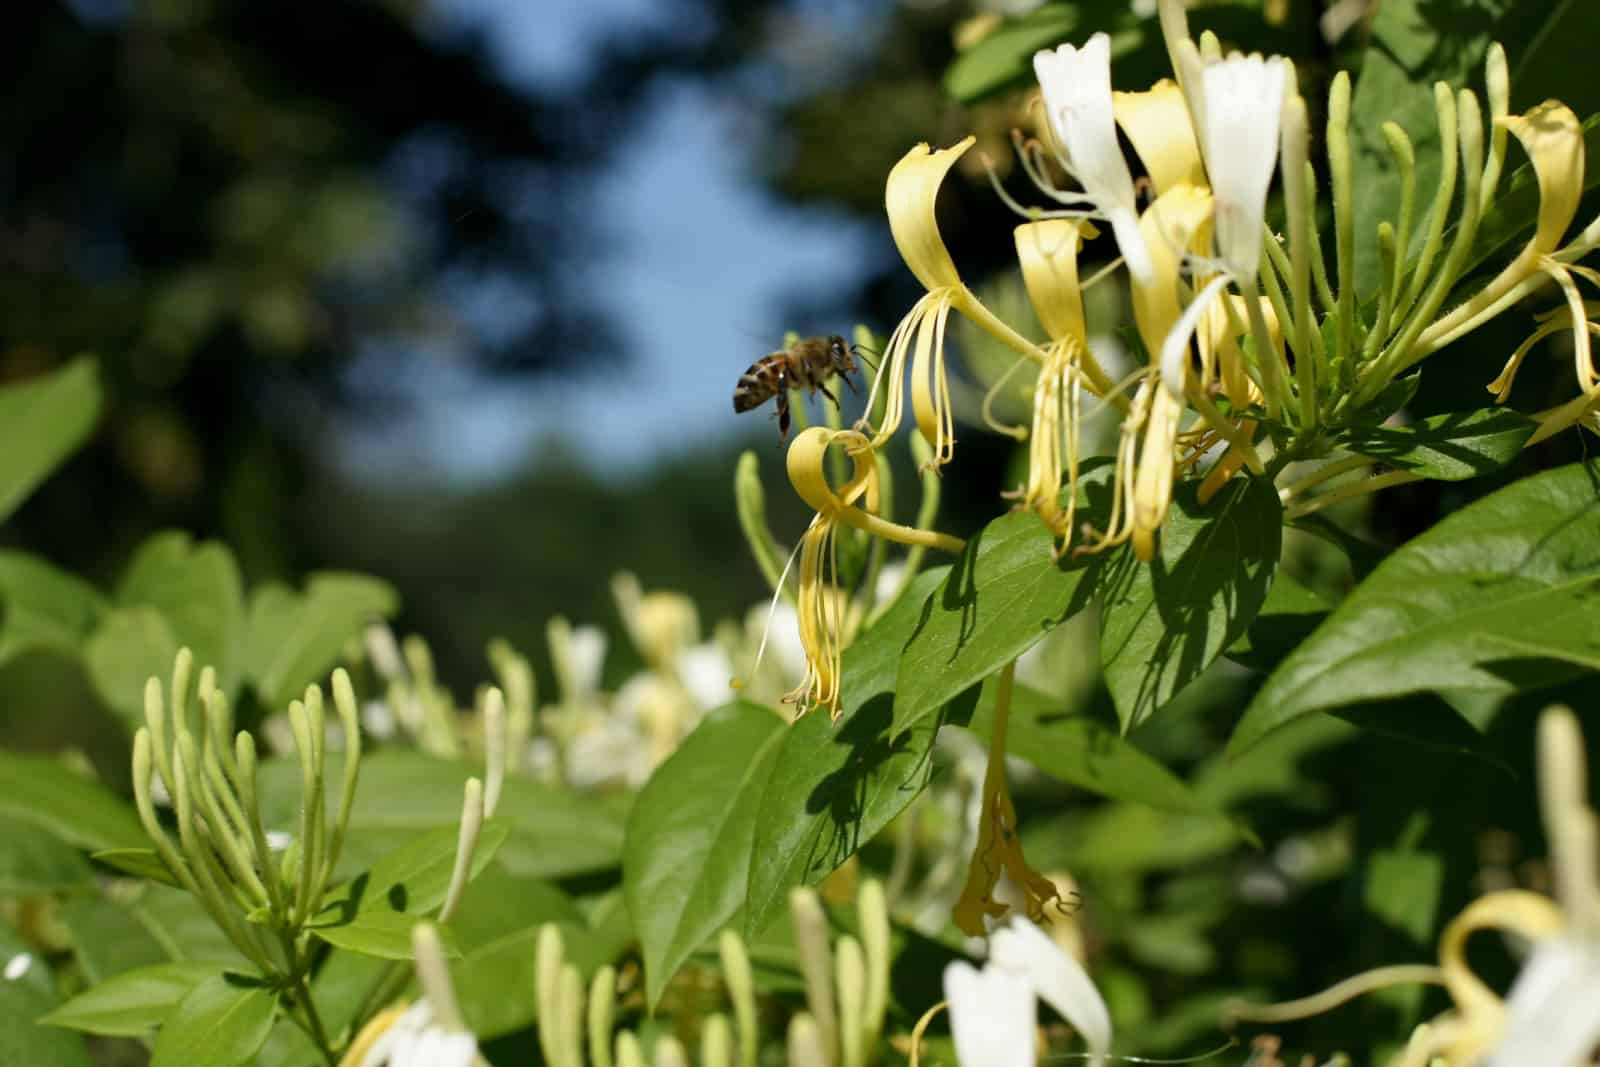 Lonicera Similis flowering plant and flying honey bee.